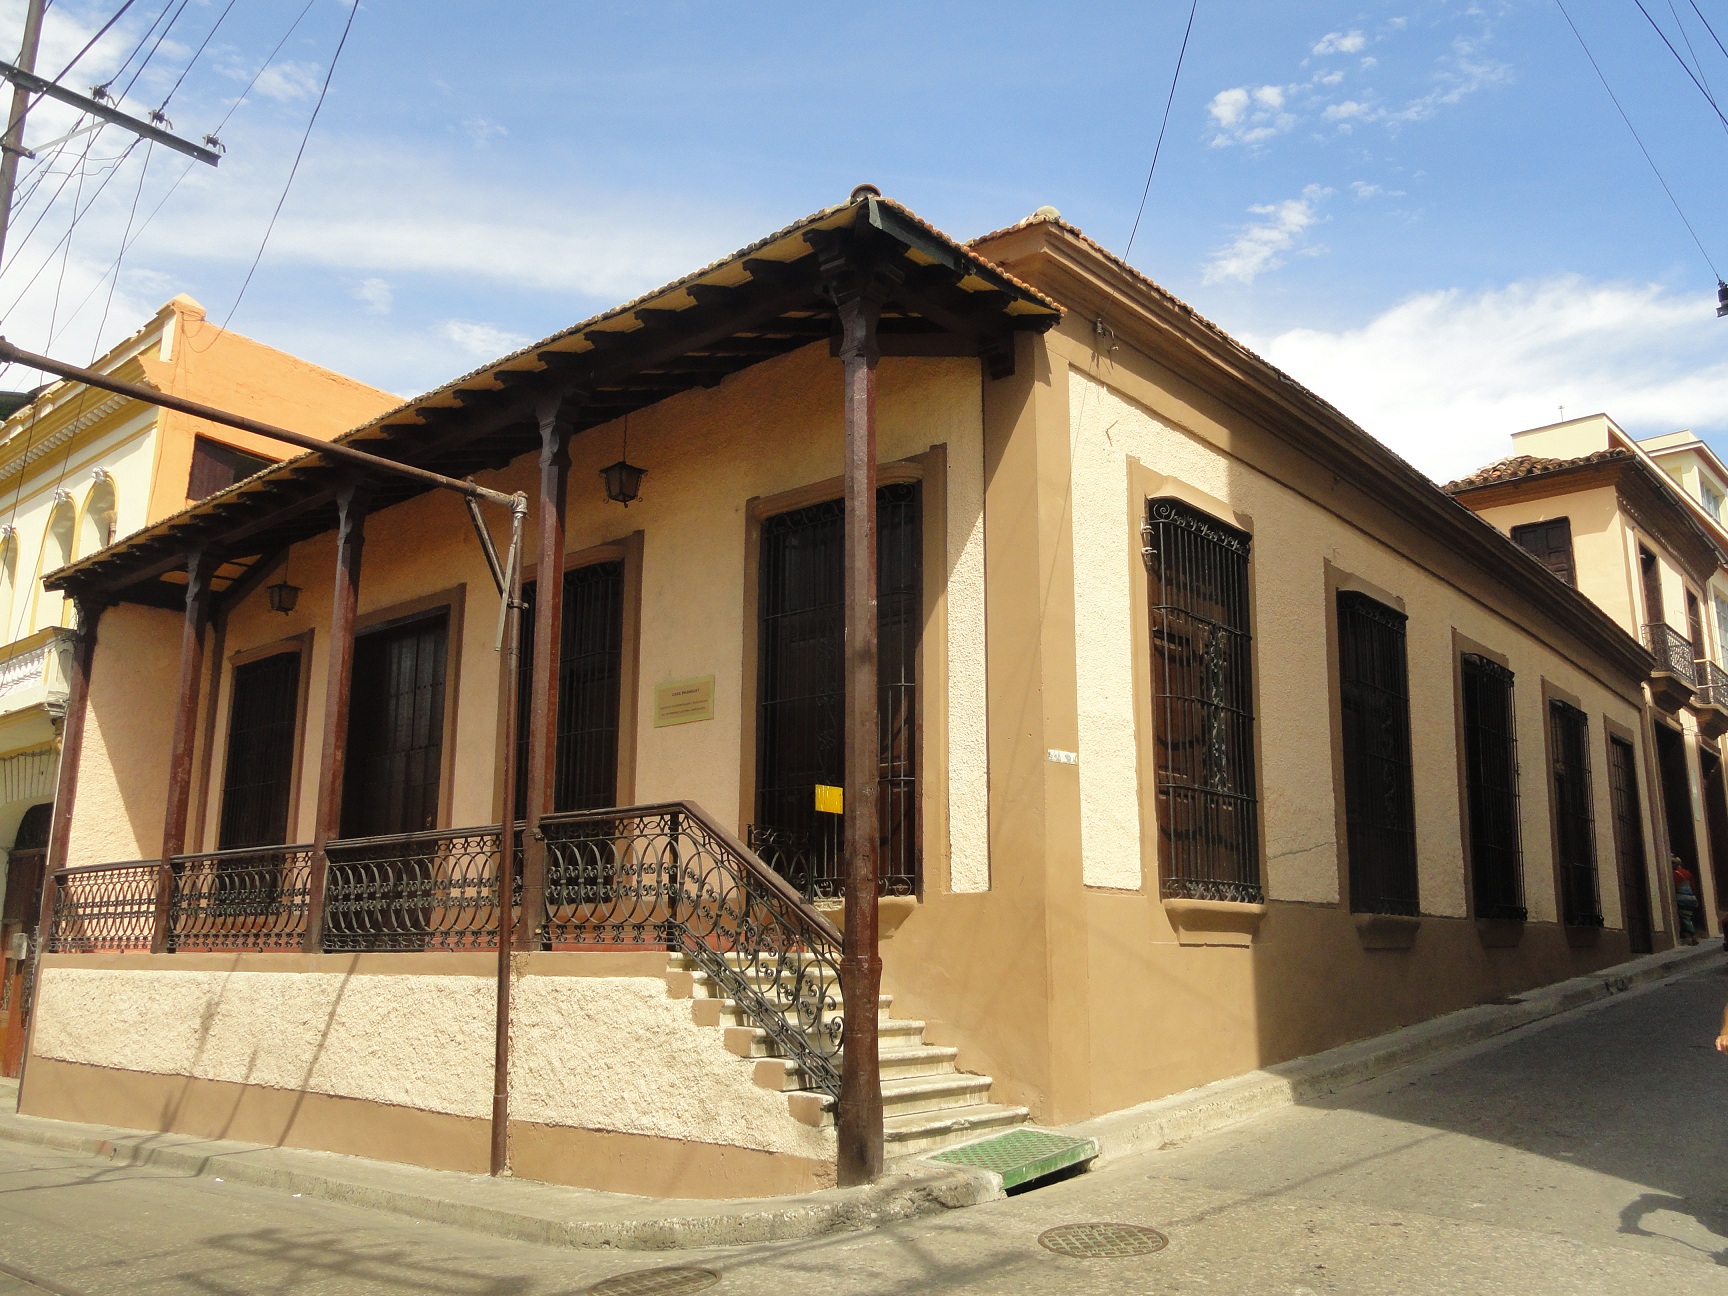 El café deleita en la Casa Dranguet  de Santiago de Cuba